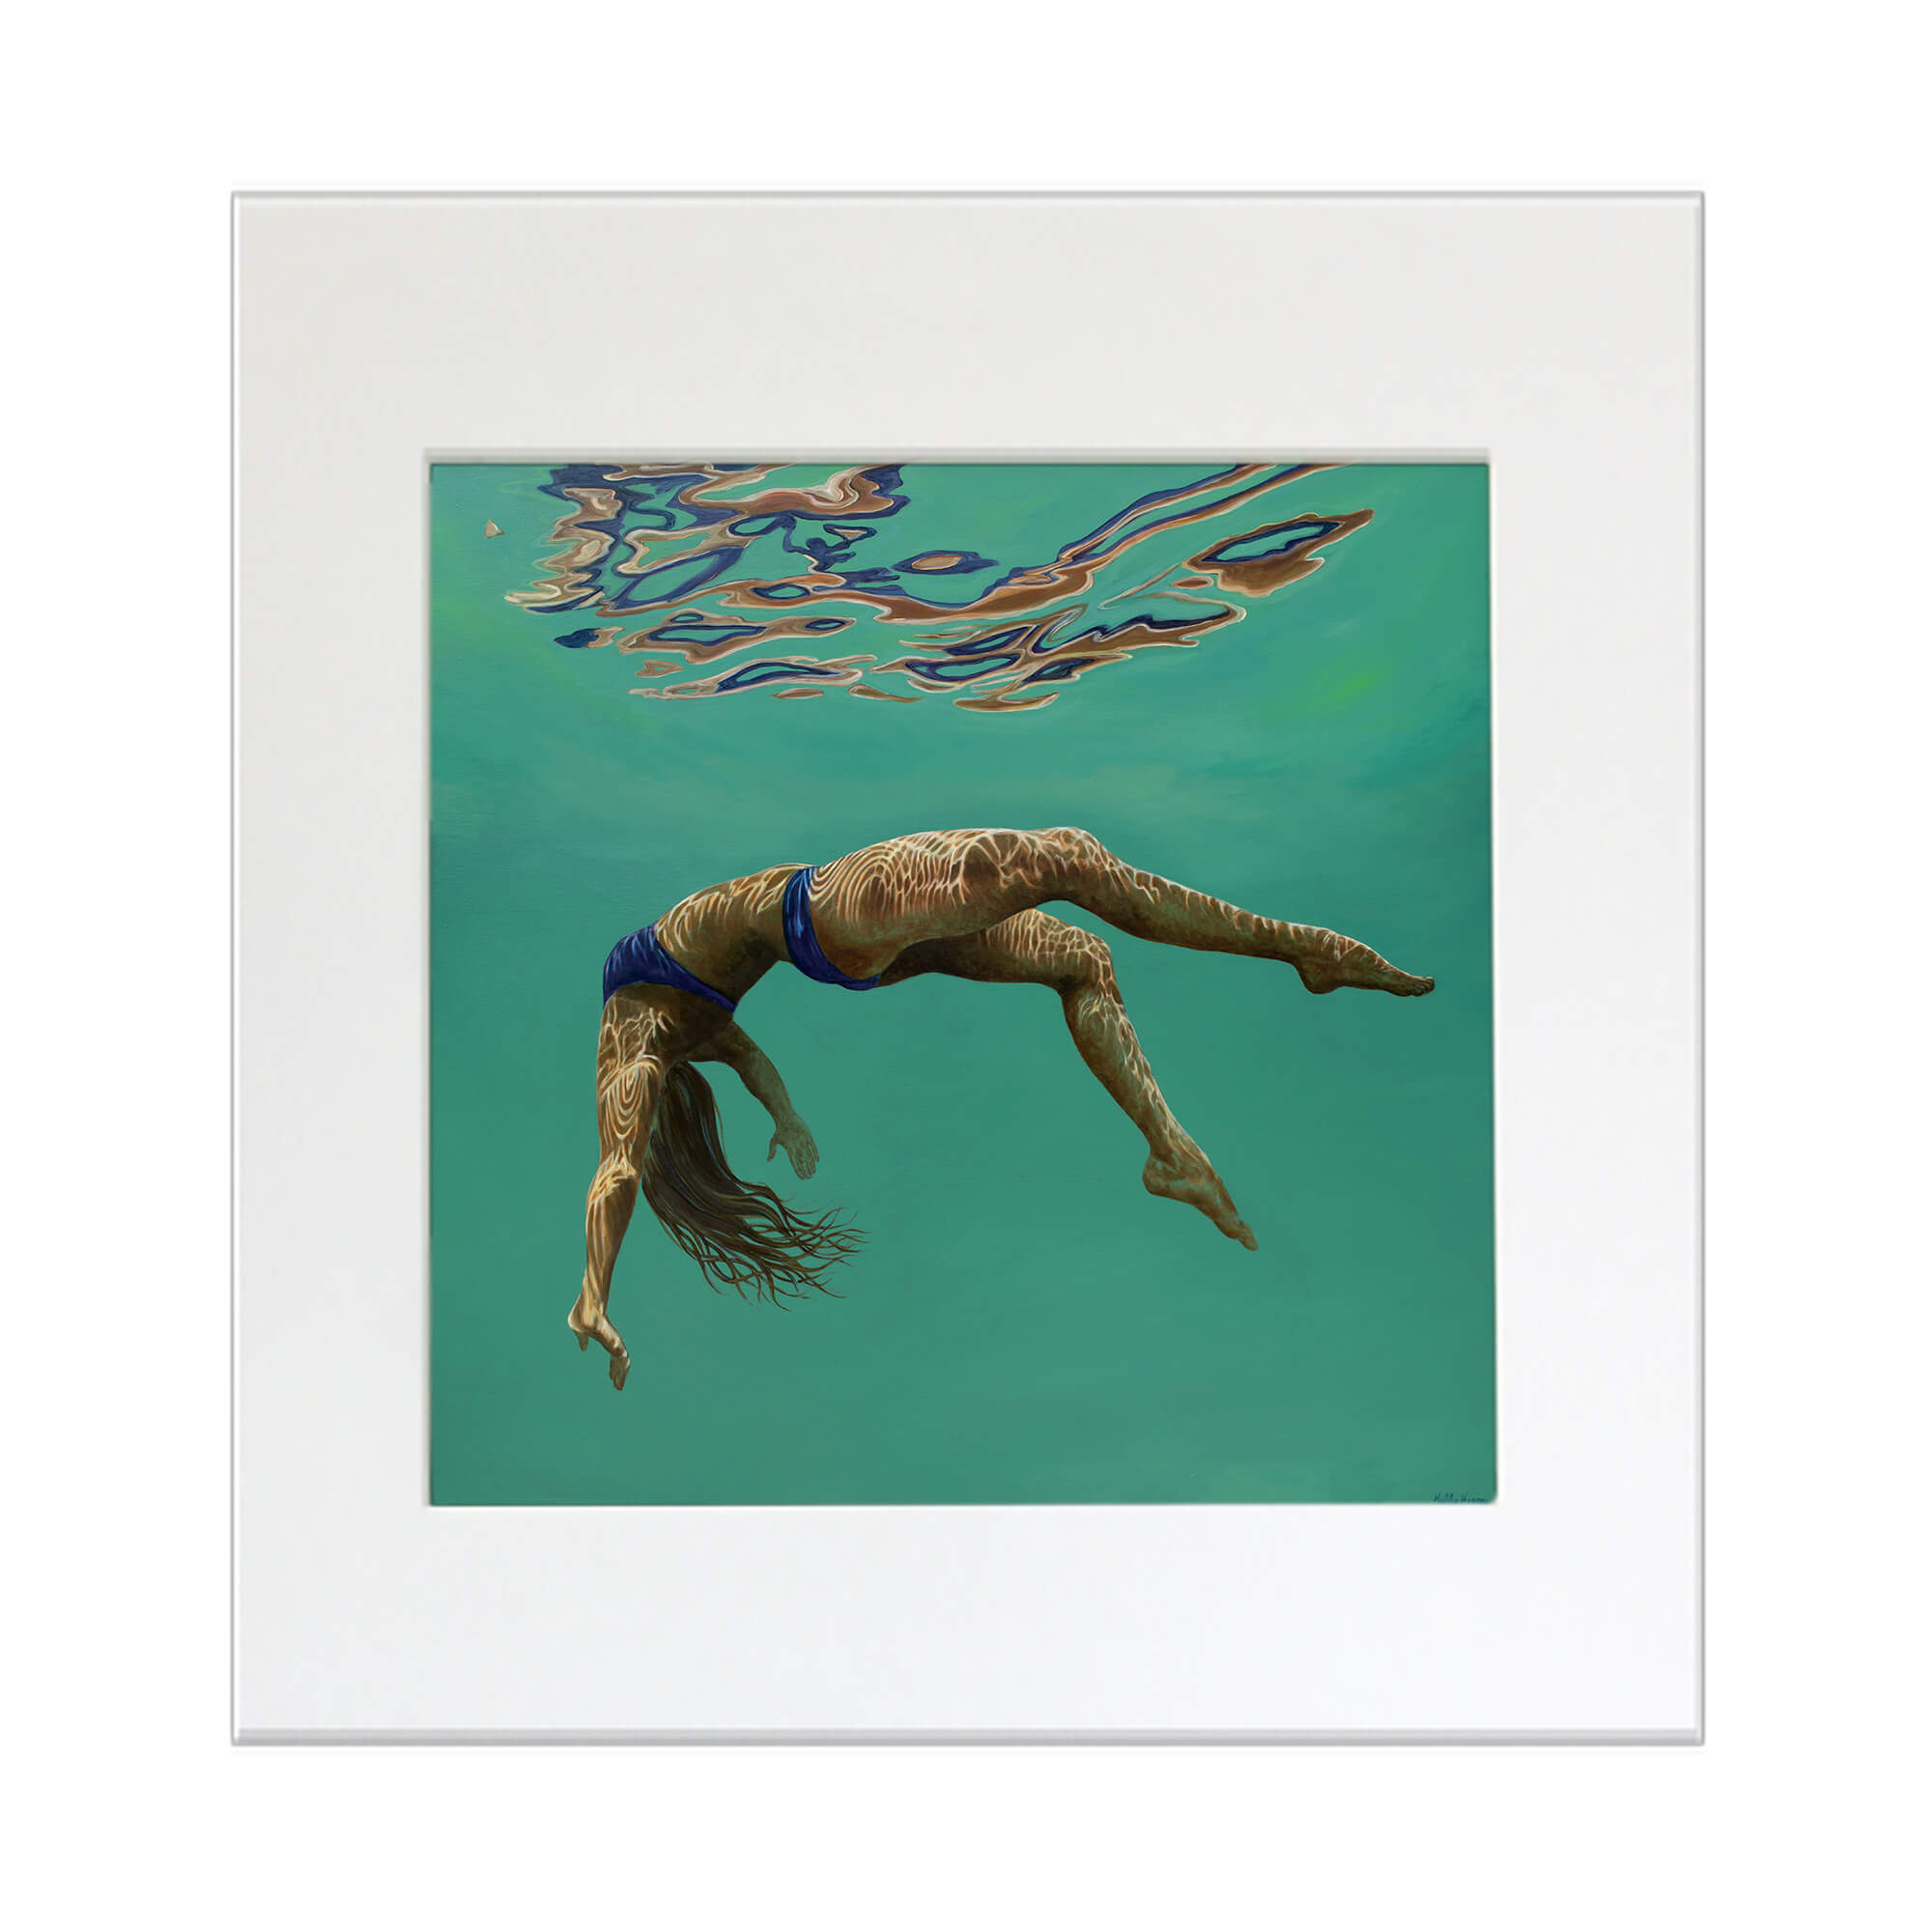 Matted art print of a woman wearing blue bikinis diving underwater by Hawaii artist Kelly Keane